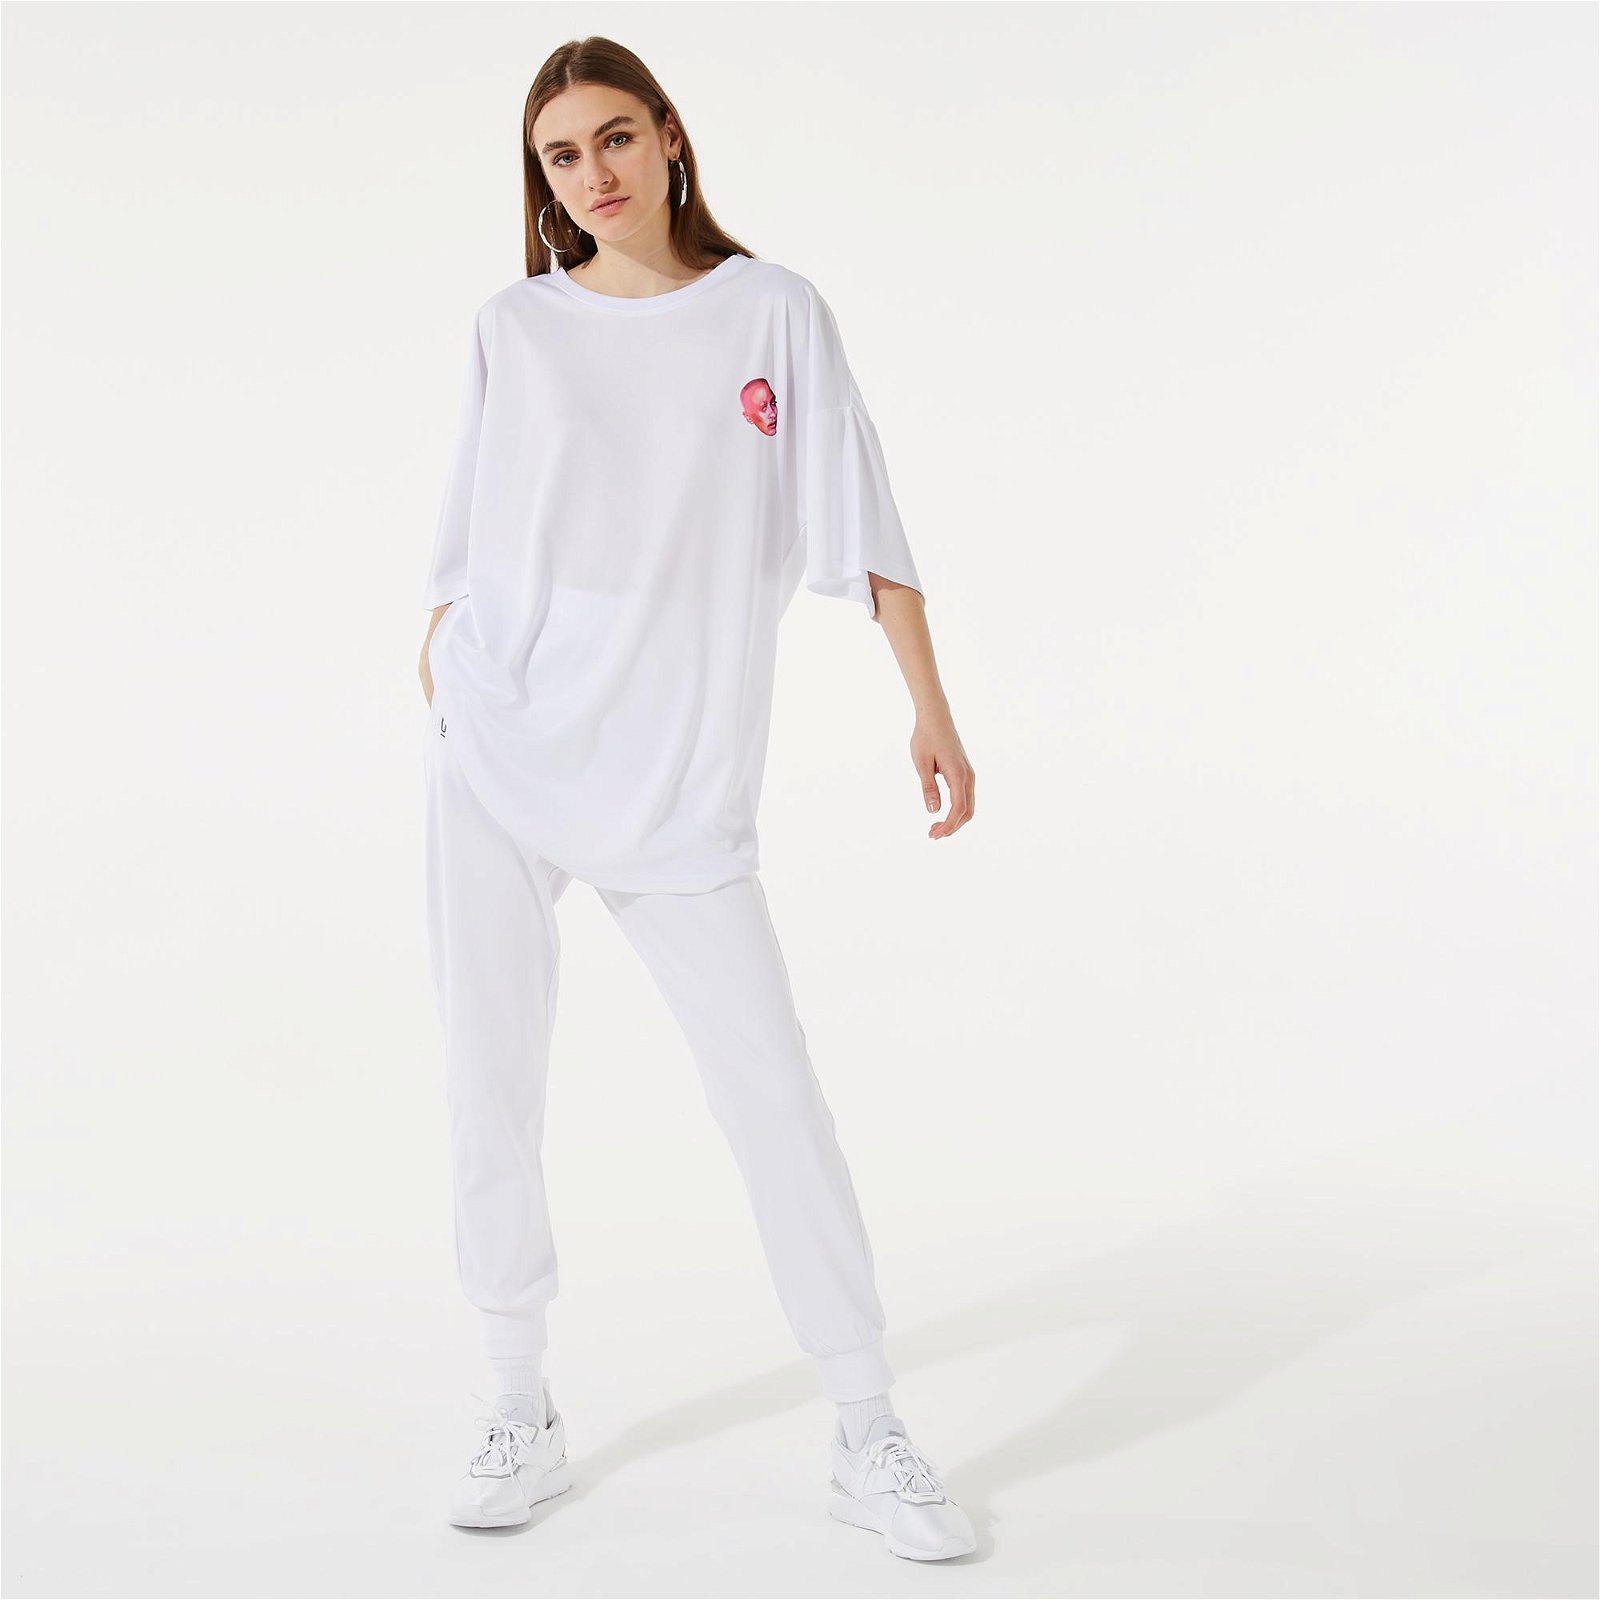 TightClub Otrea Unisex Beyaz T-Shirt